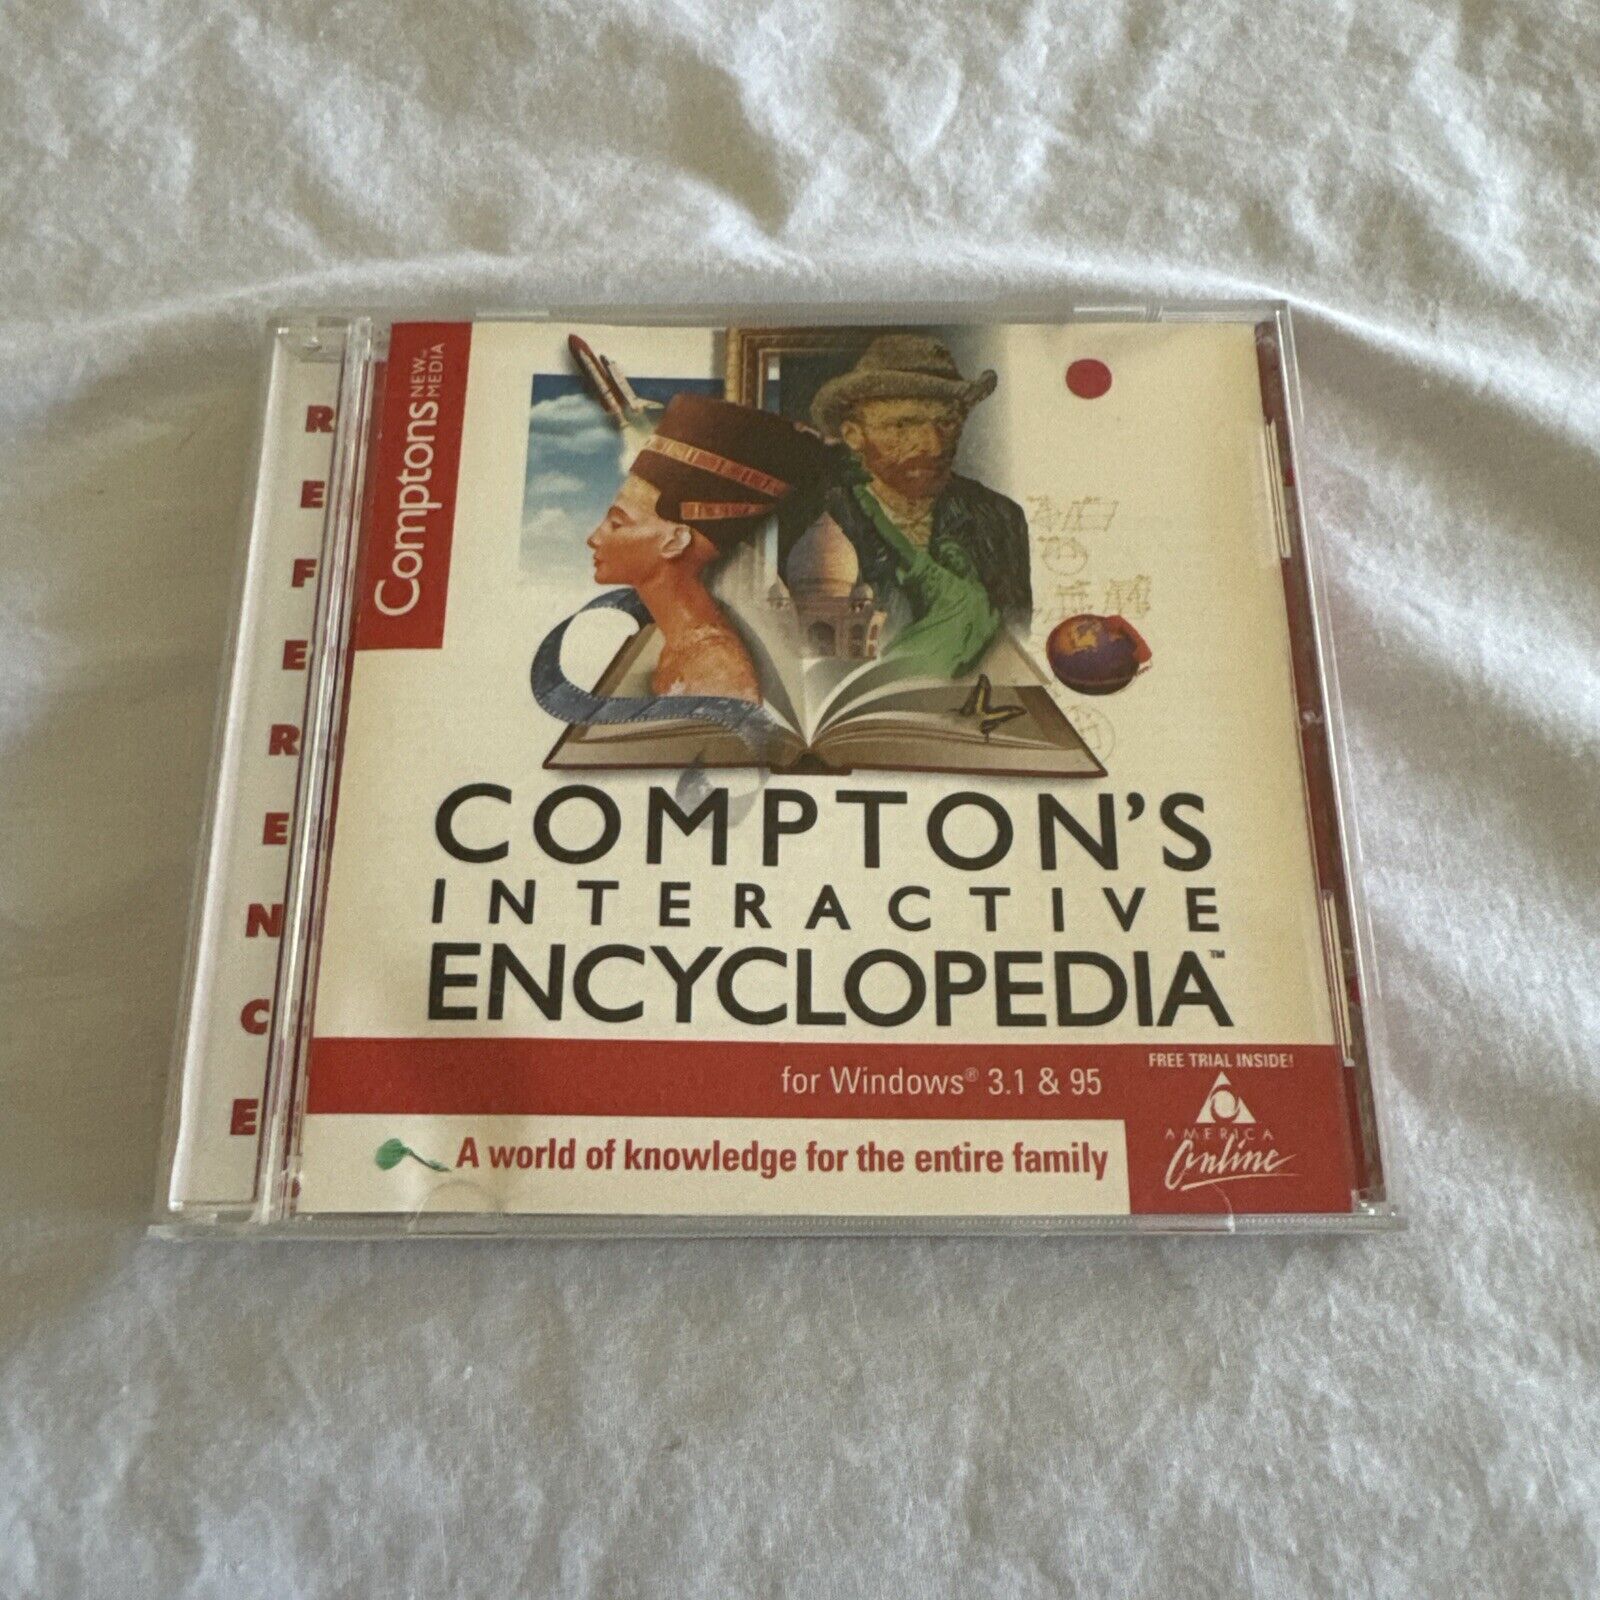 Compton's Interactive Encyclopedia 1996 Edition CD Rom For Windows VGC